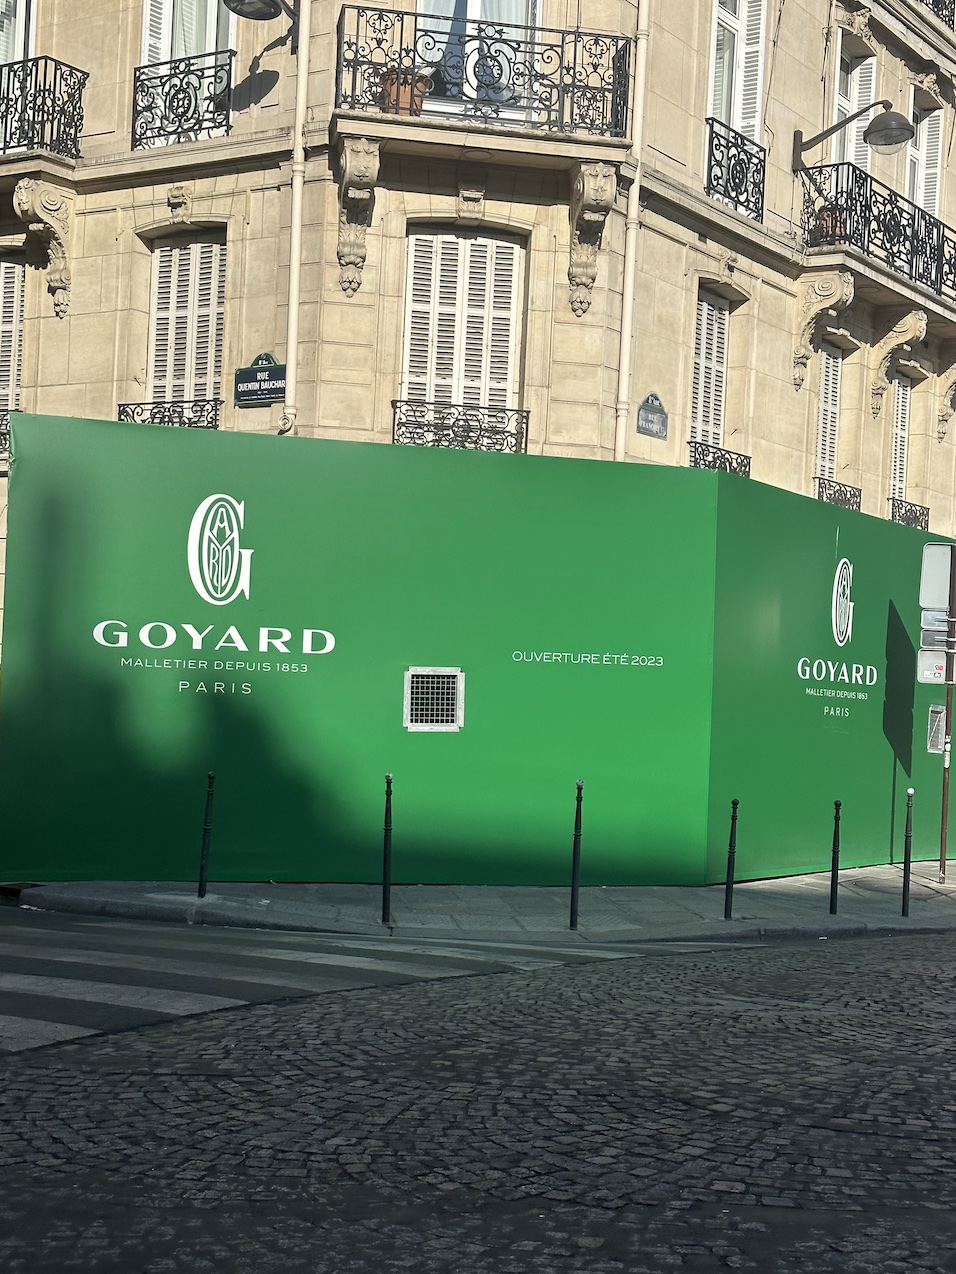 Printemps in Paris: My Goyard Tips, Reveal and Experience - PurseBop